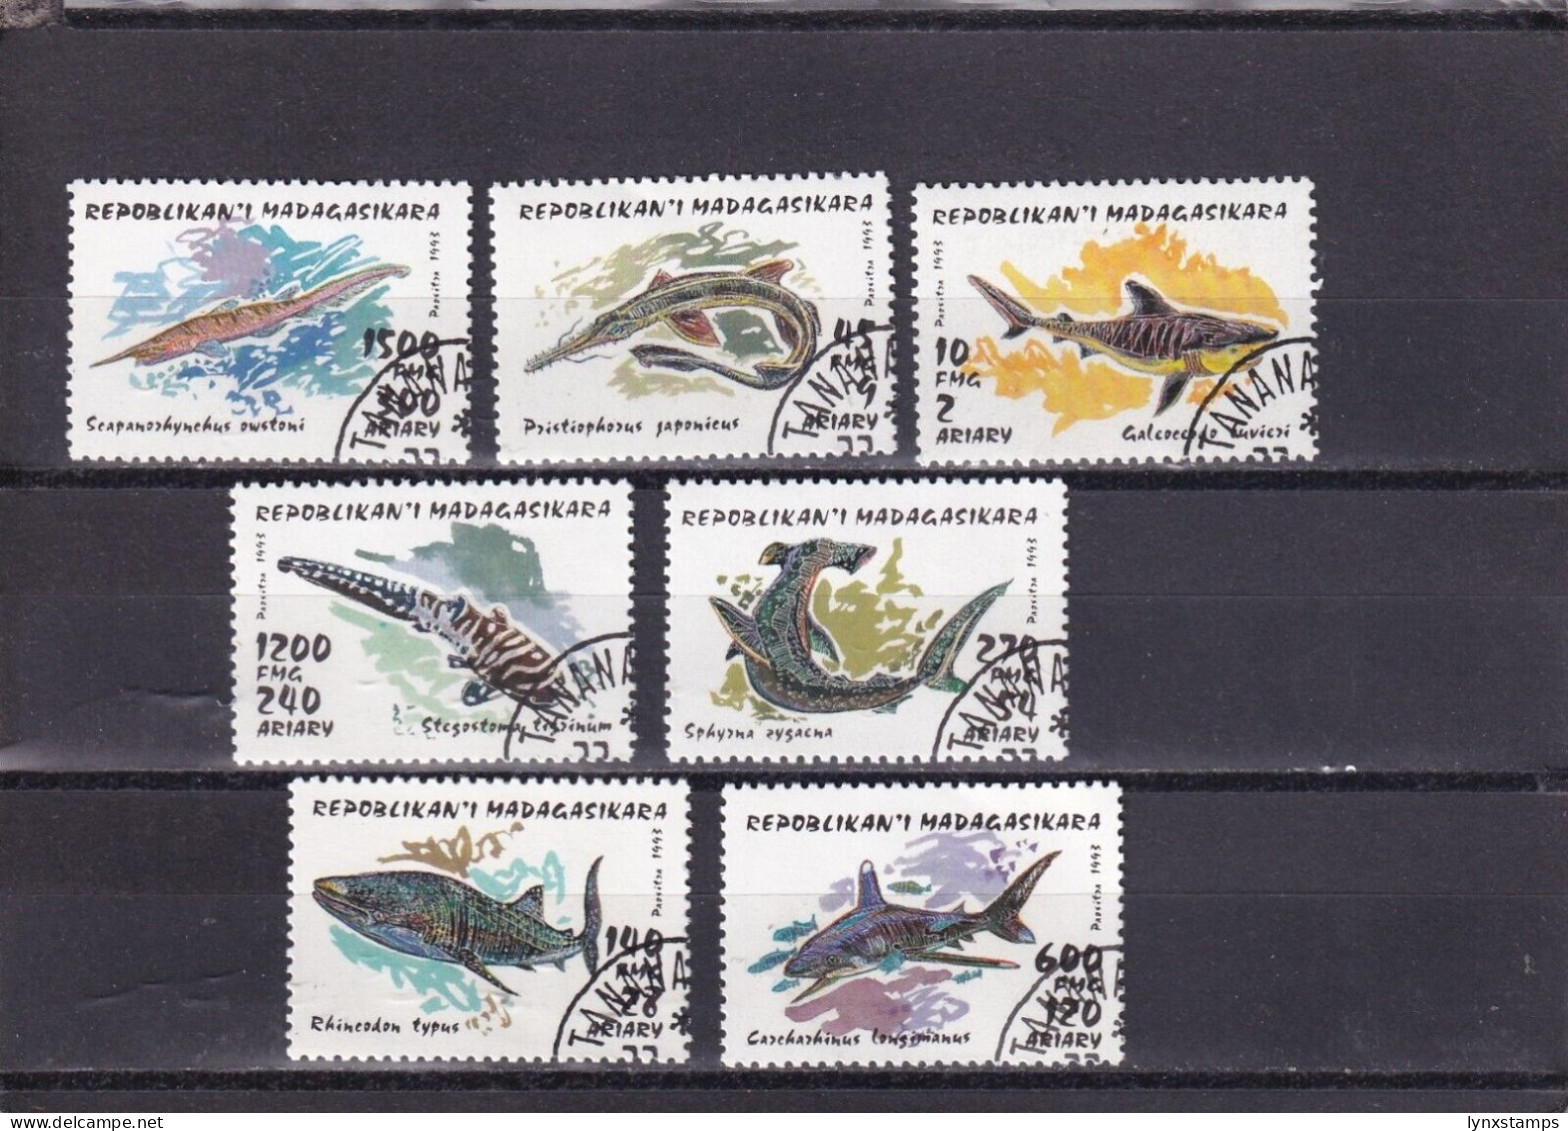 LI02 Madagascar 1993 Sharks Full Set Used Stamps - Madagascar (1960-...)